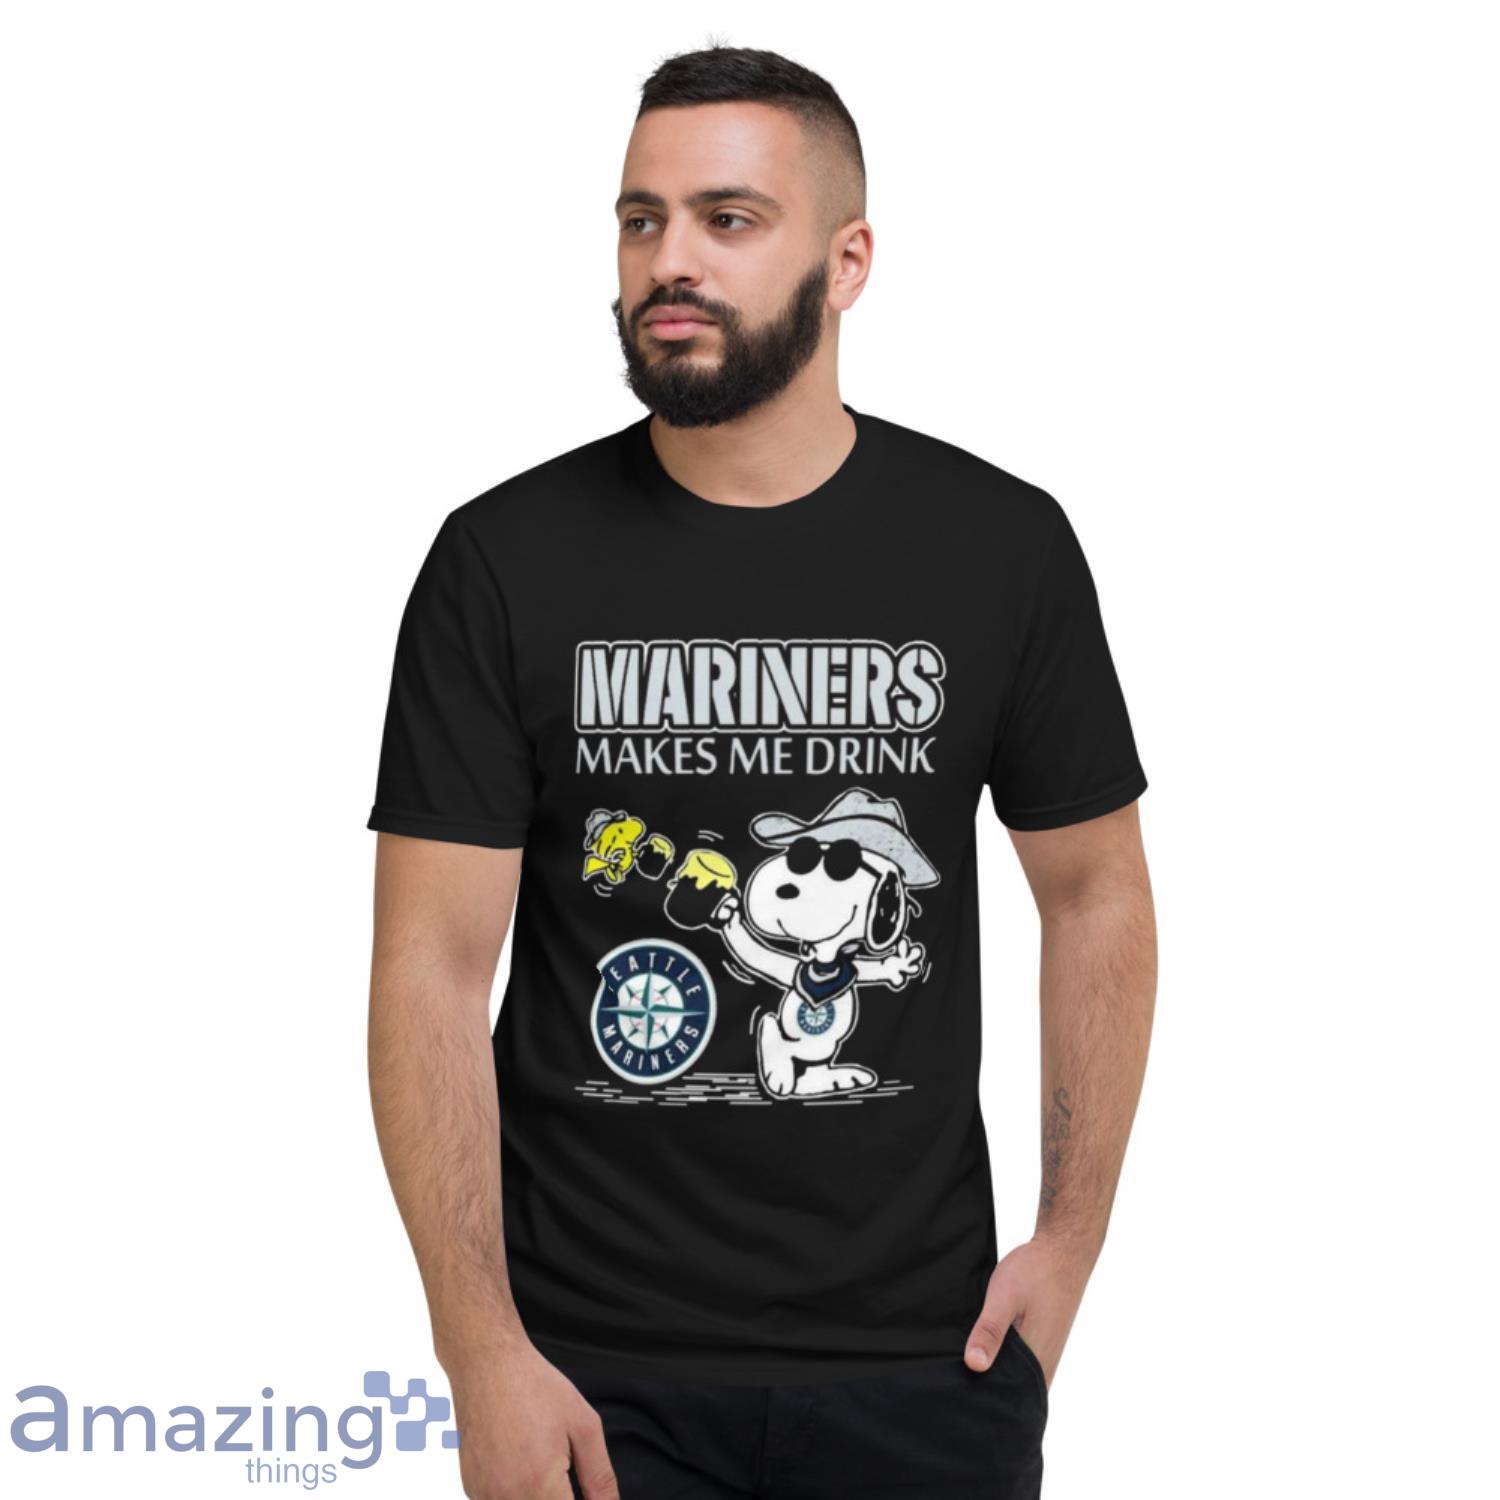 mariners shirt near me